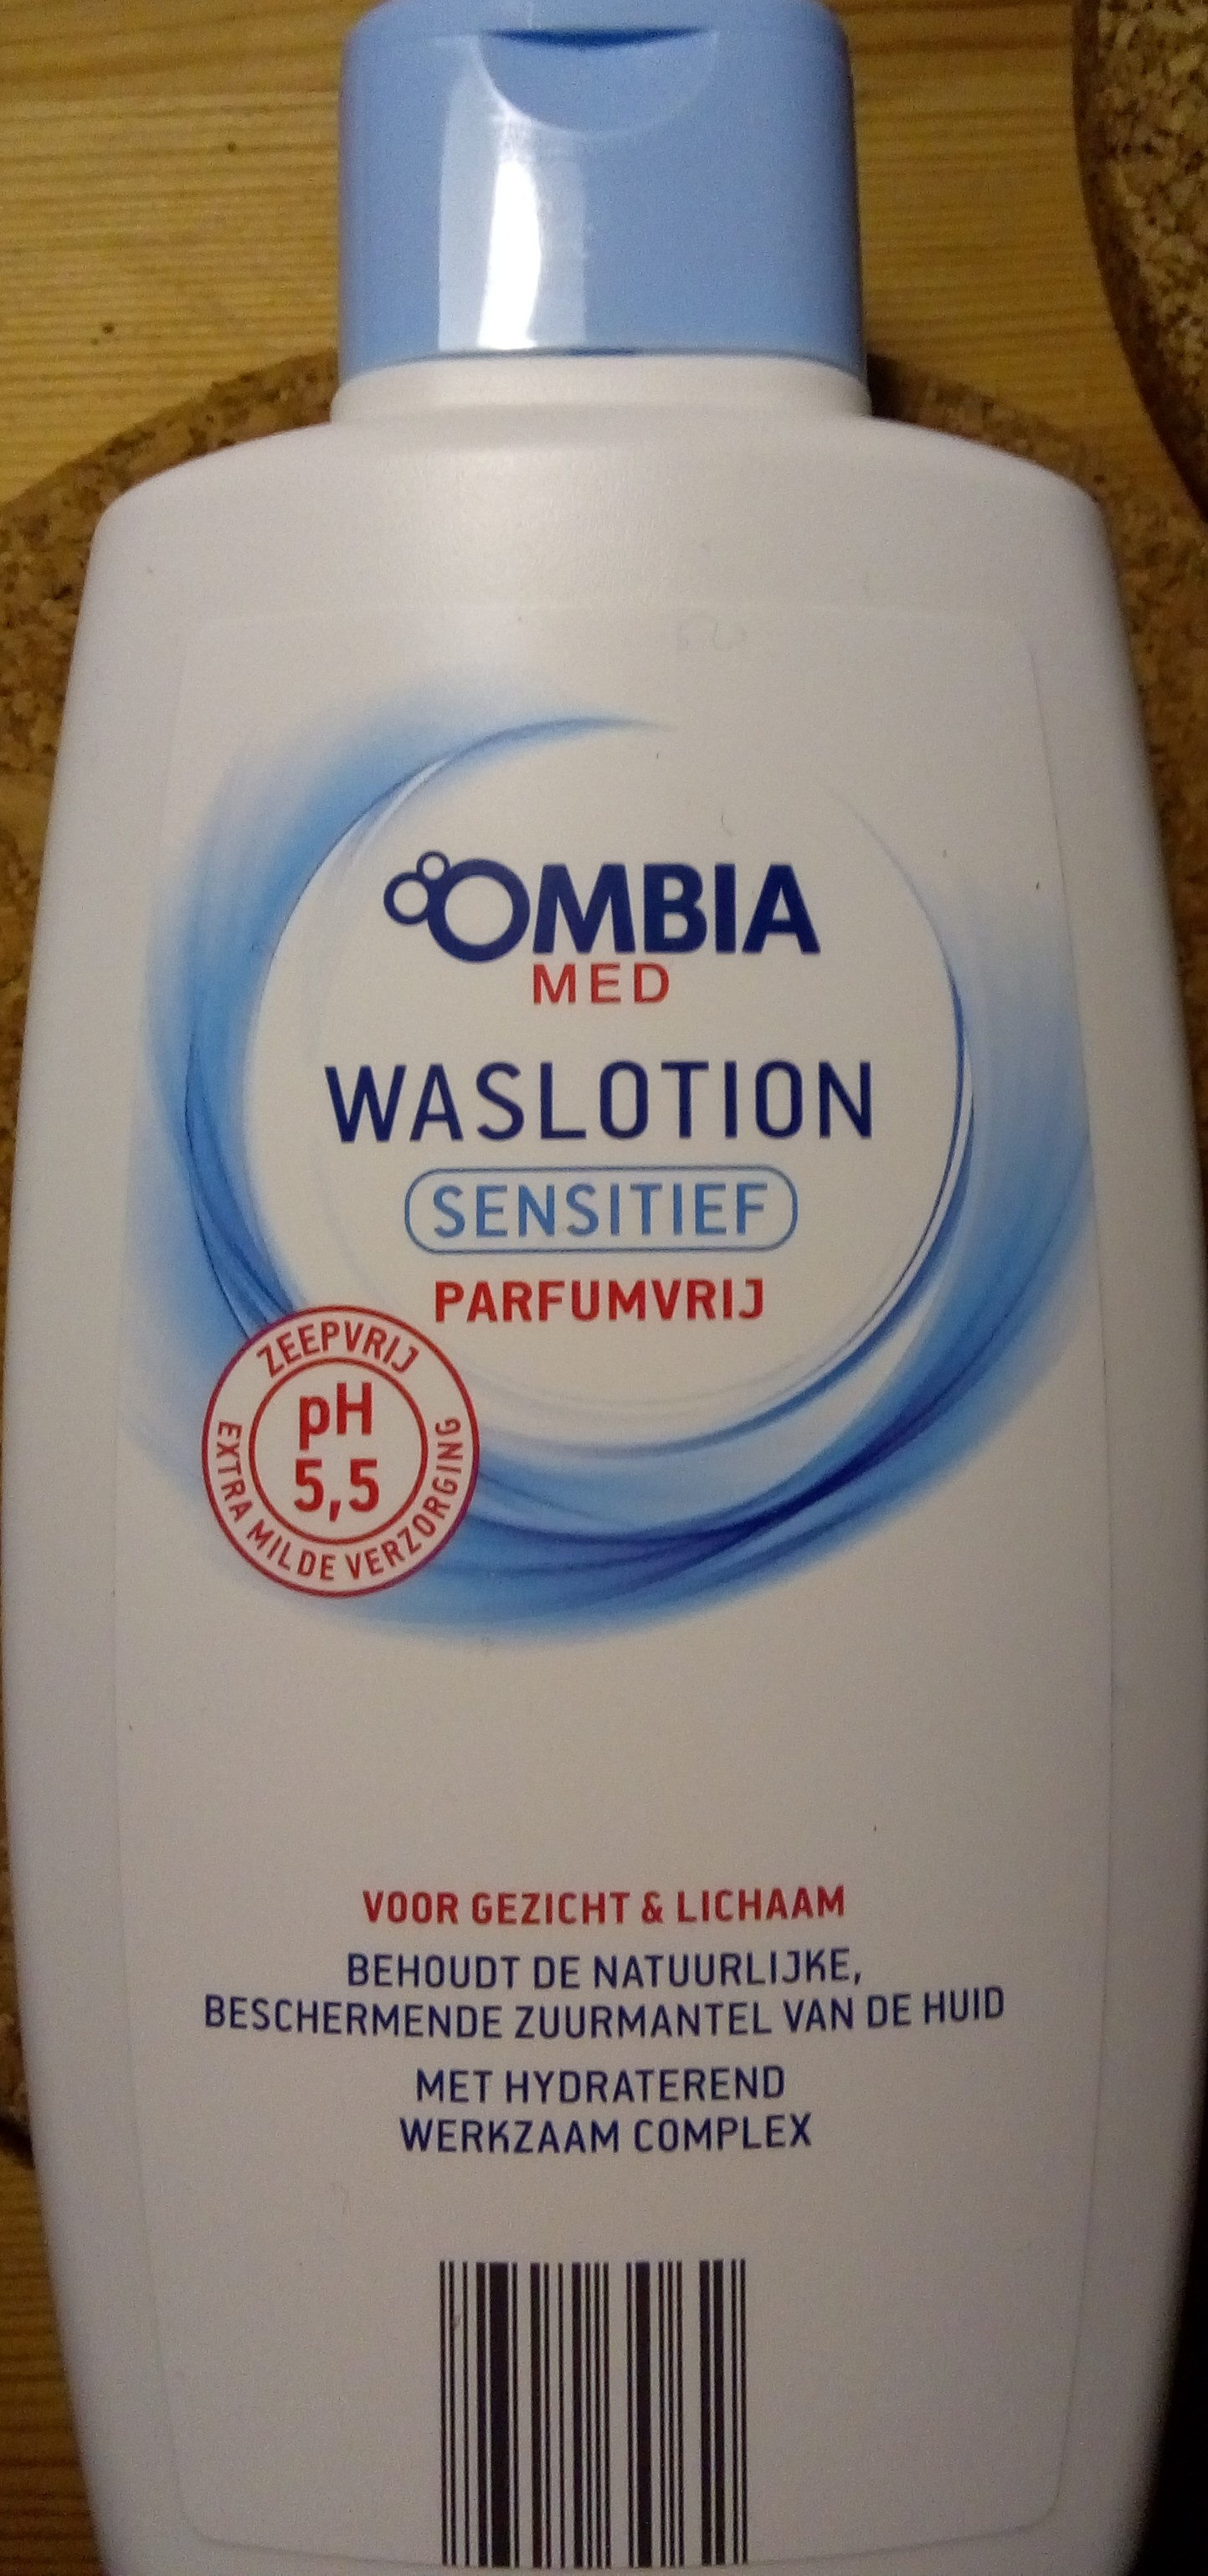 Ombia Med waslotion sensitief - Produit - nl